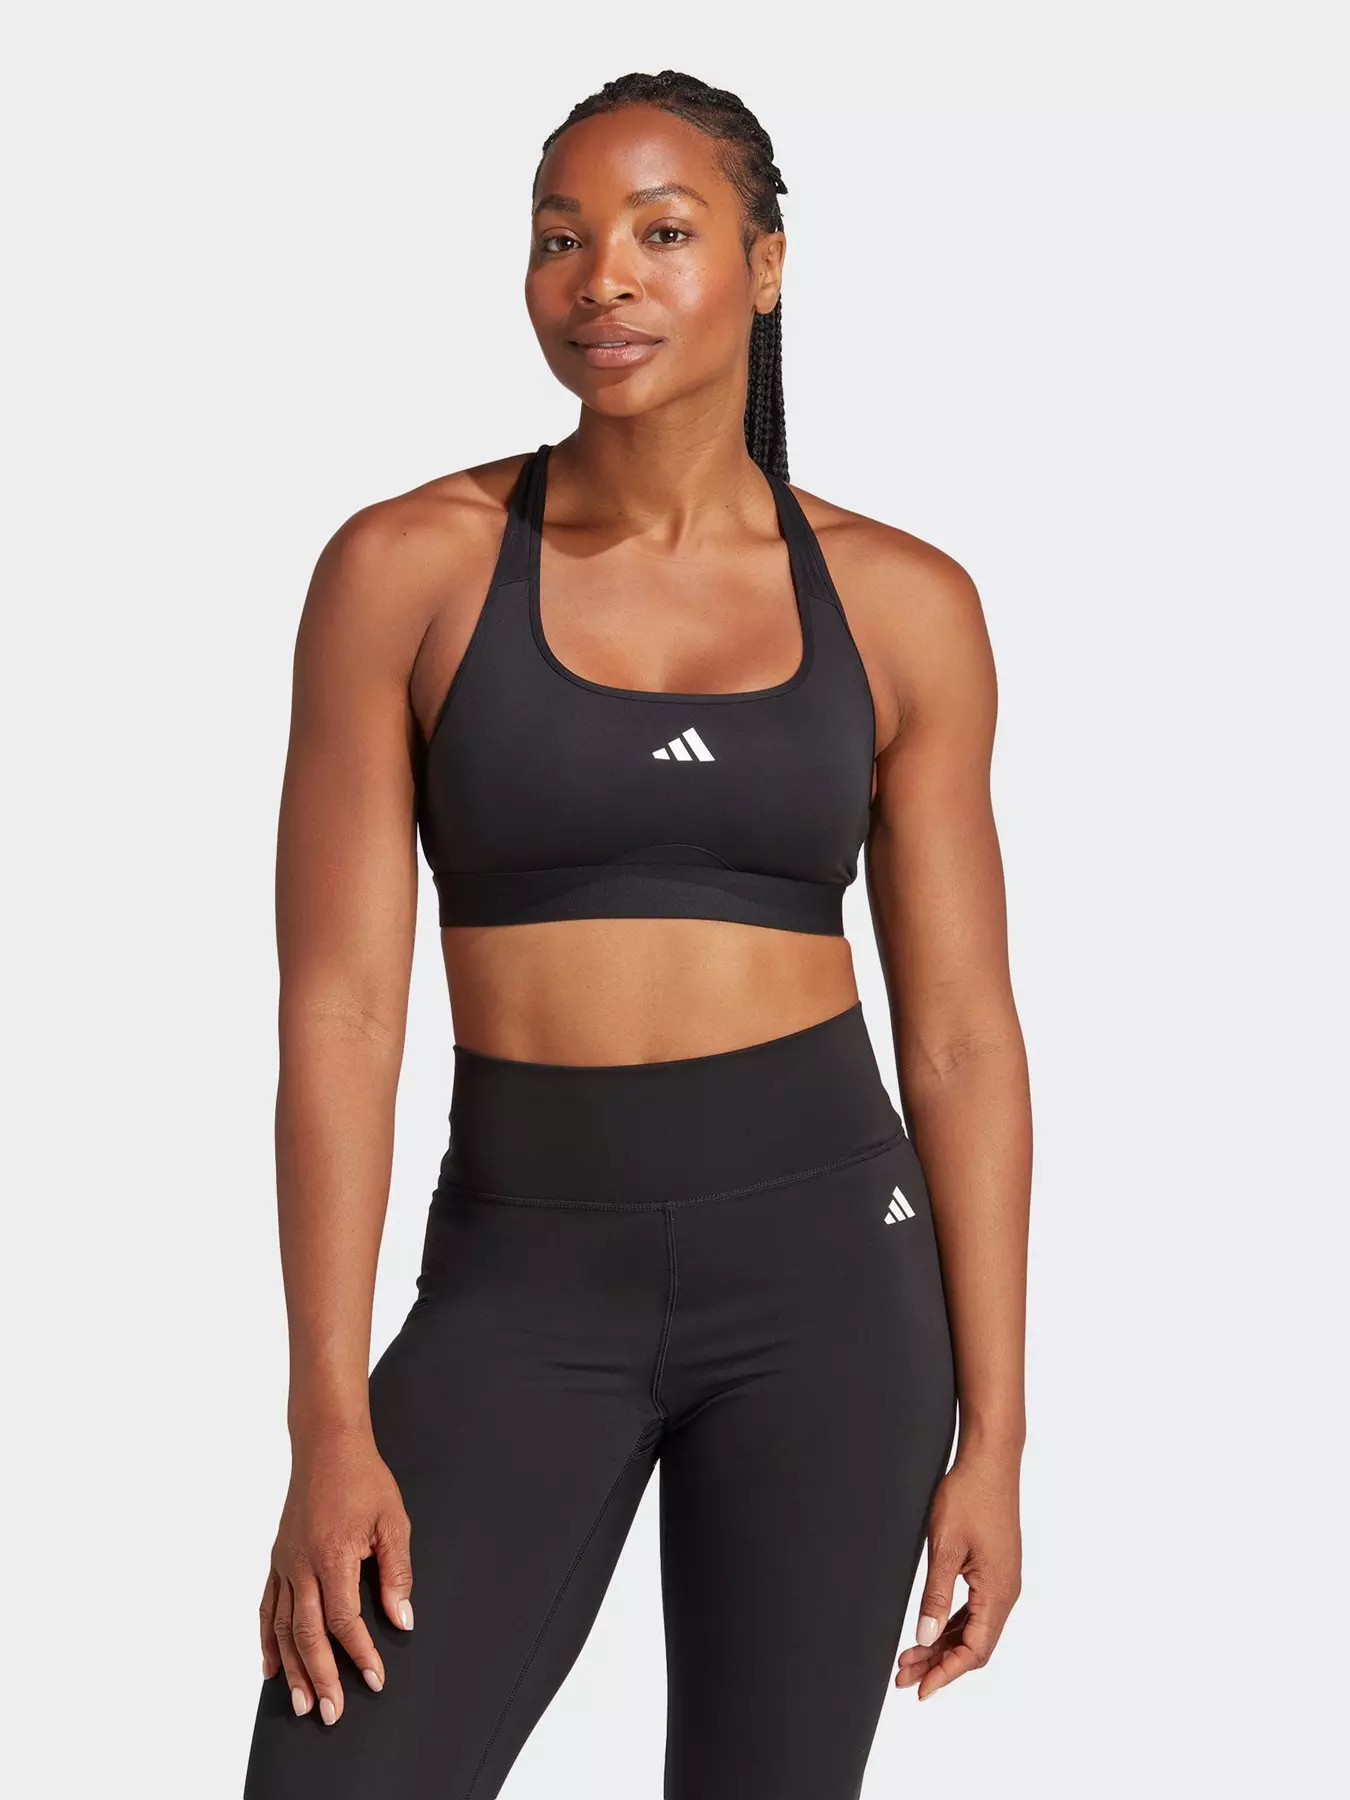 https://media.very.co.uk/i/very/VP6NK_SQ1_0000000004_BLACK_MDf/adidas-womens-training-power-react-medium-support-sports-bra-black.jpg?$180x240_retinamobilex2$&fmt=webp